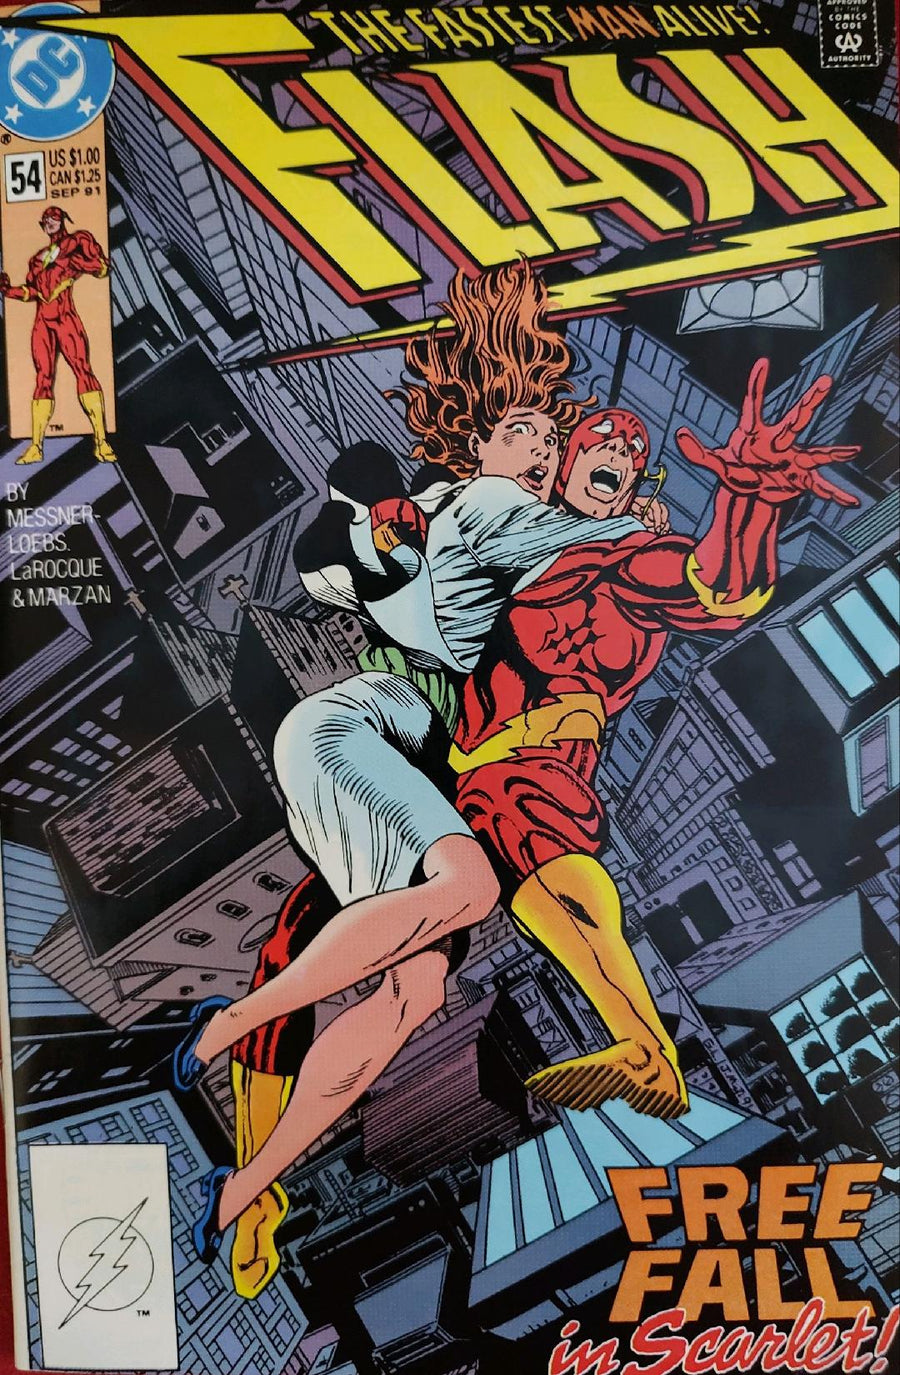 Flash #54 Vol 2 1991 Comic Book Cover